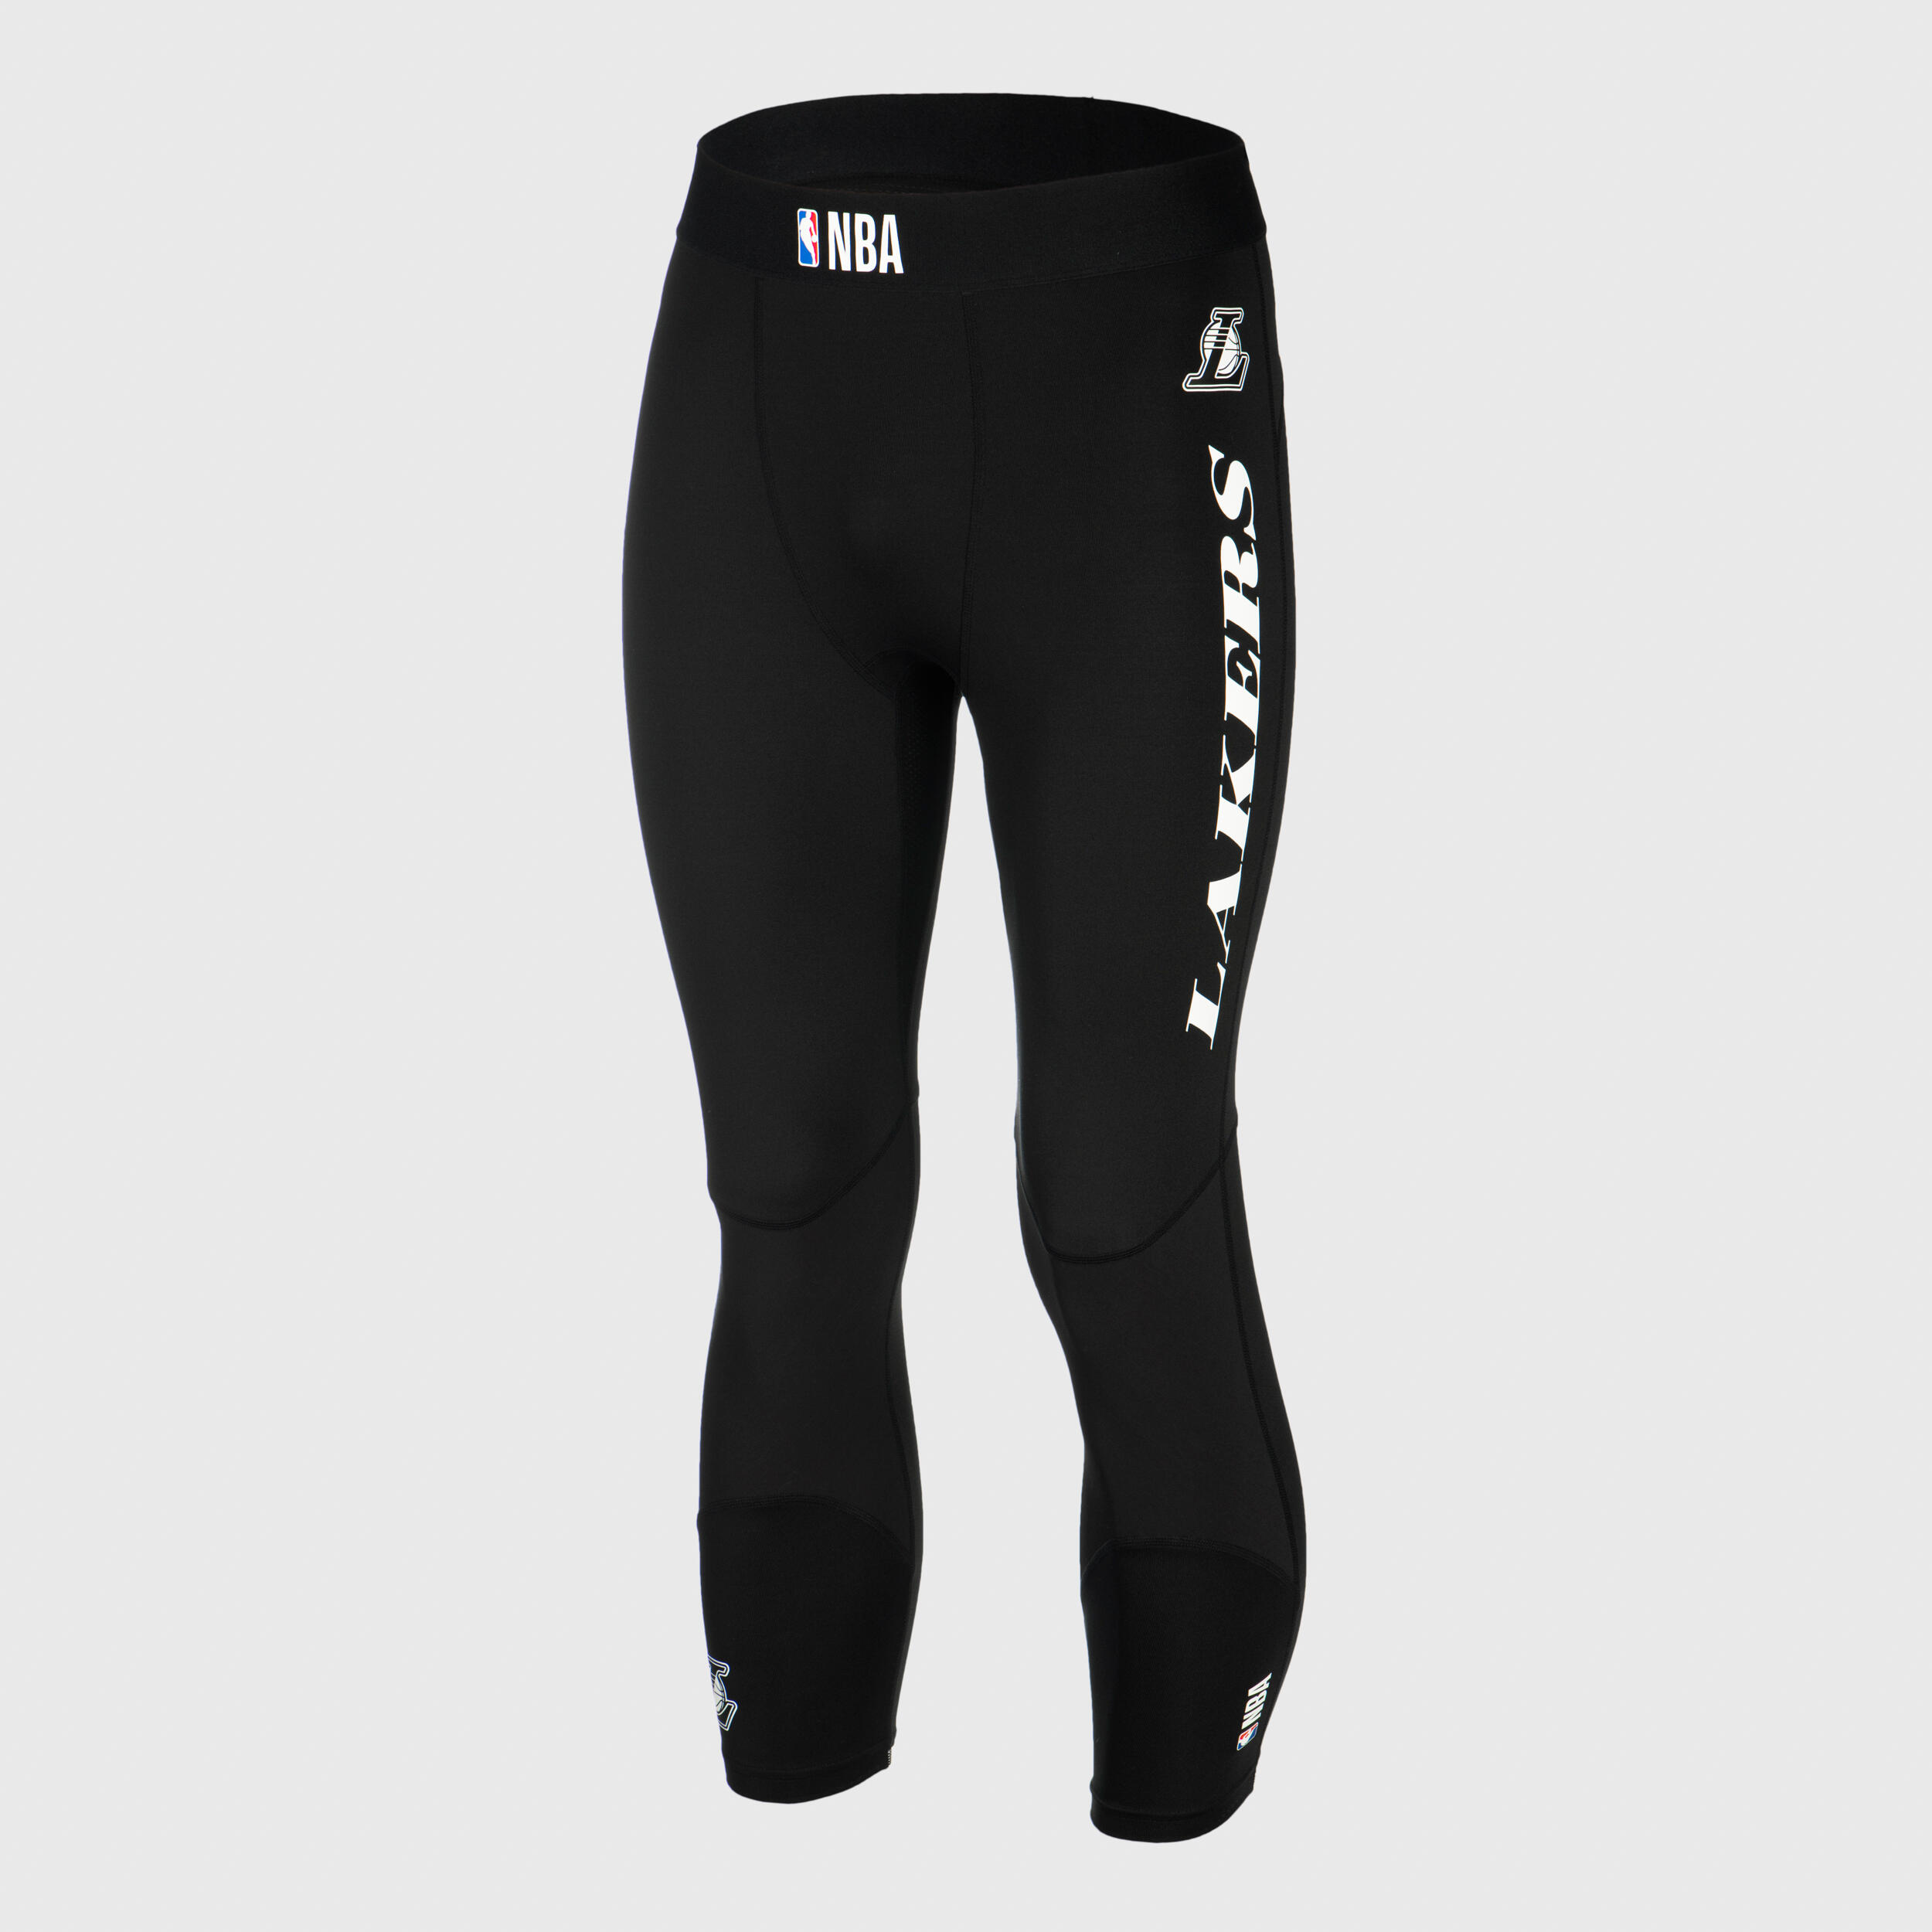 Buy Men's Running Breathable Tight Shorts Dry Black Online | Decathlon